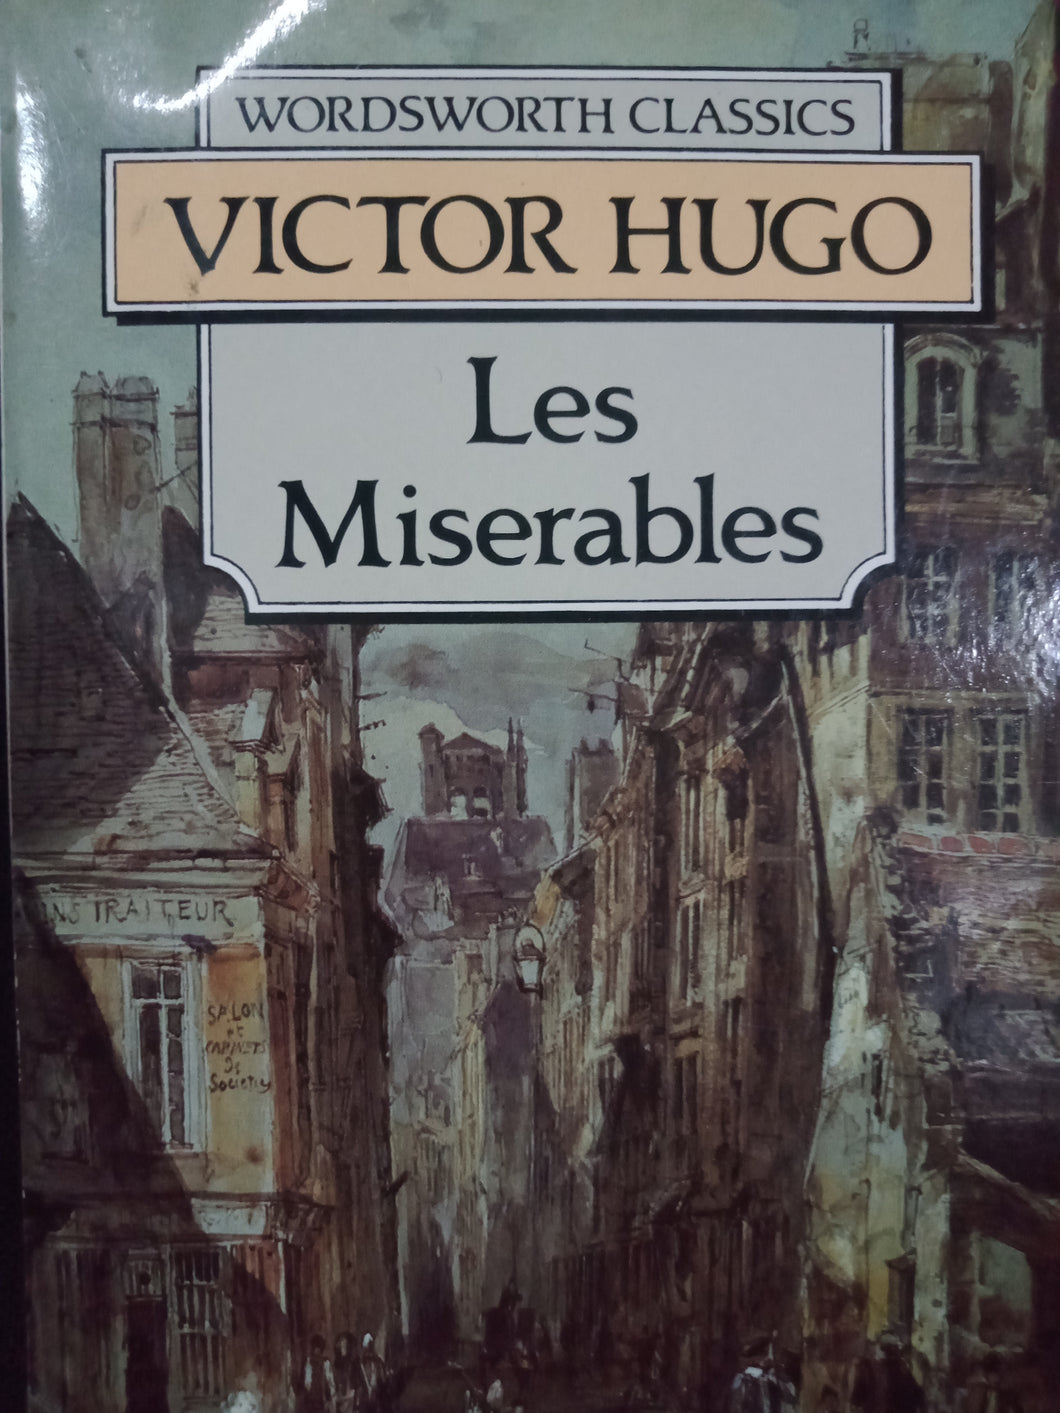 Les Miserables Volume 1 by Victor Hugo